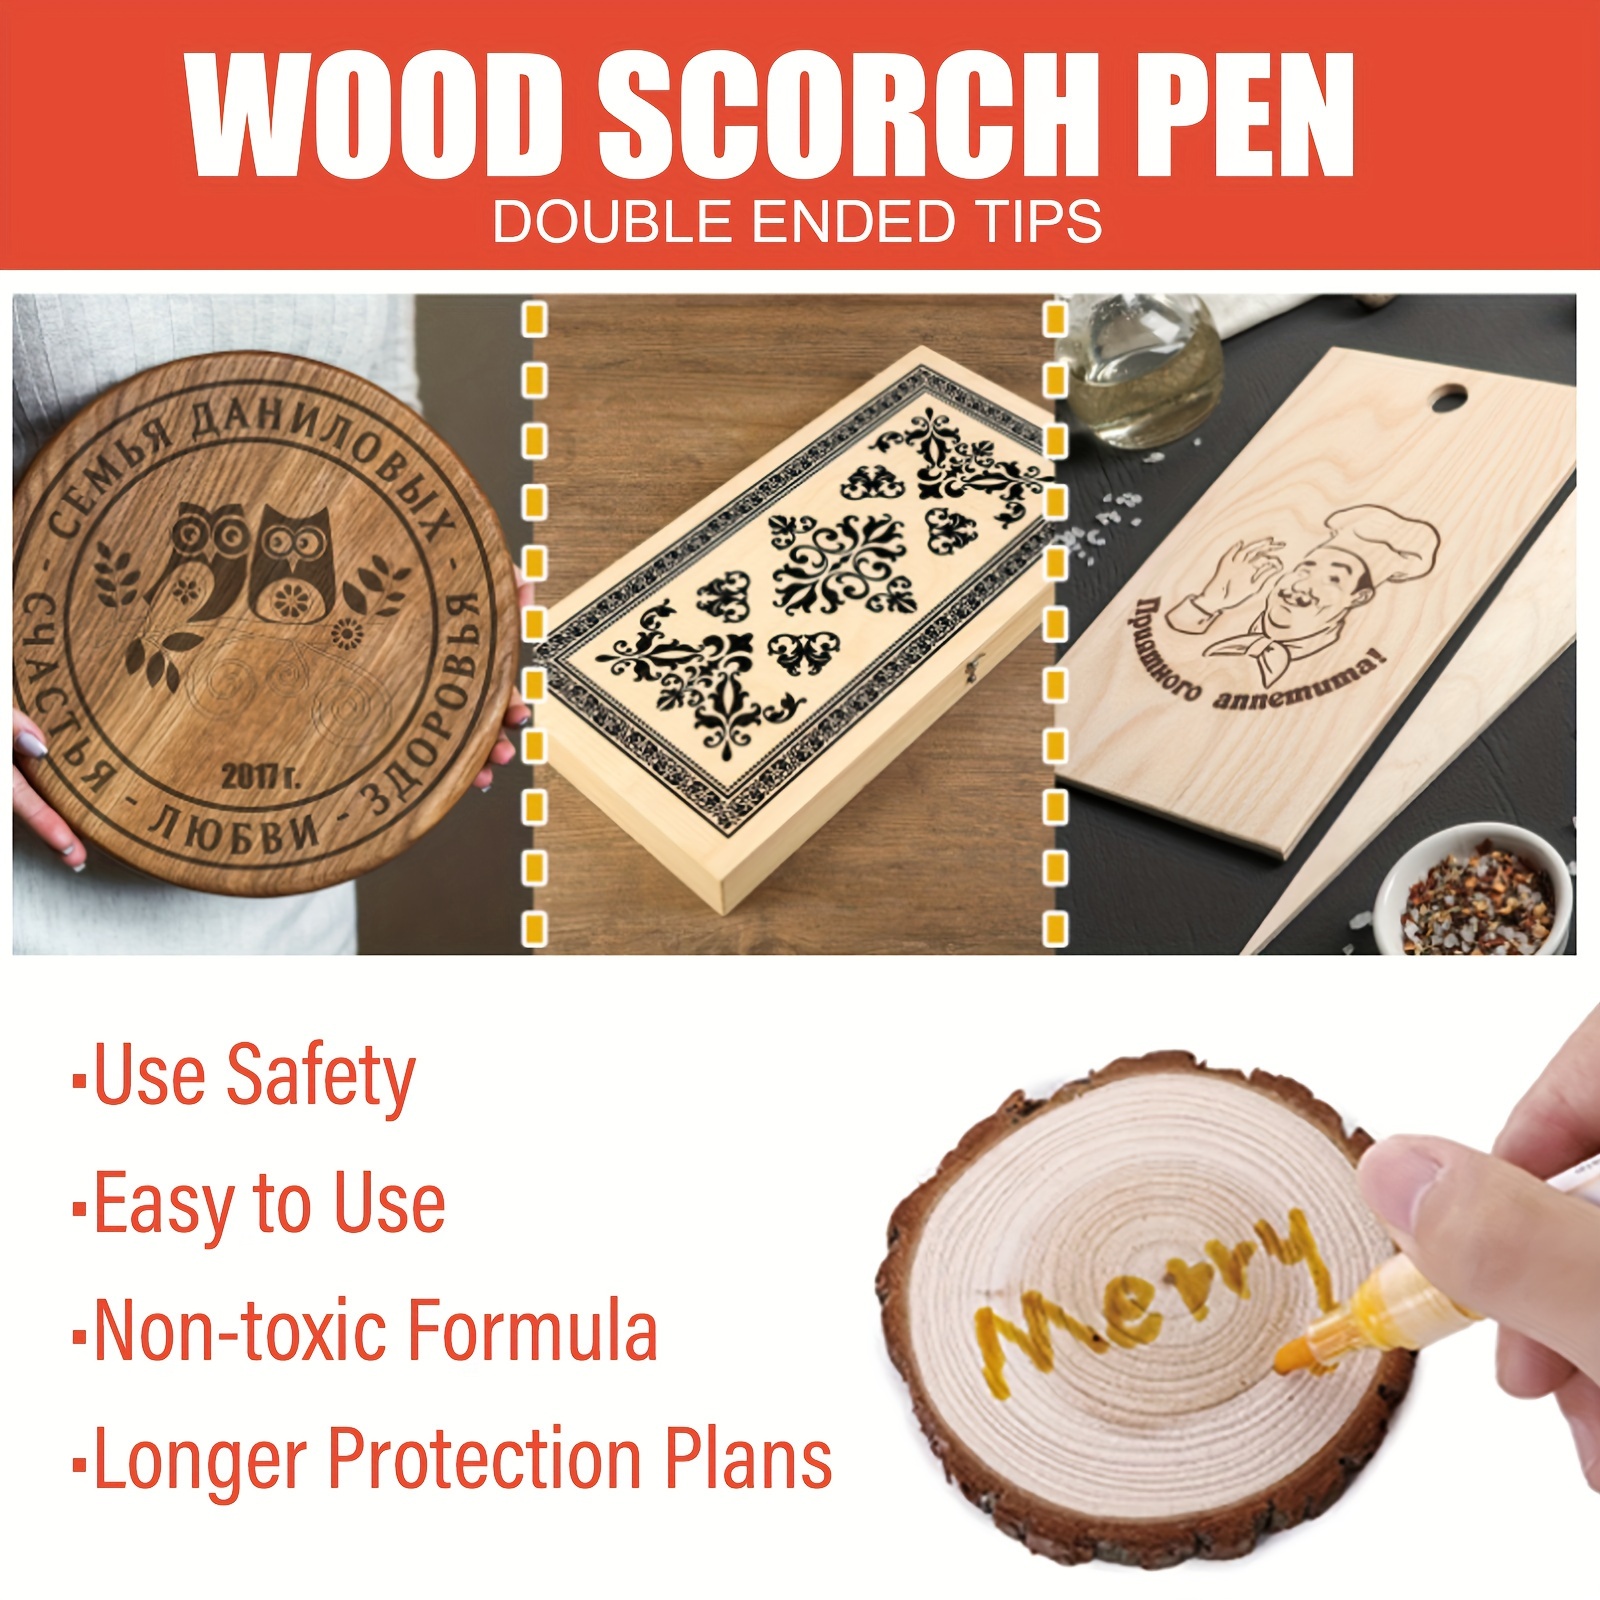 Scorch Marker Wood Burning  Wood Burning Pen Creative